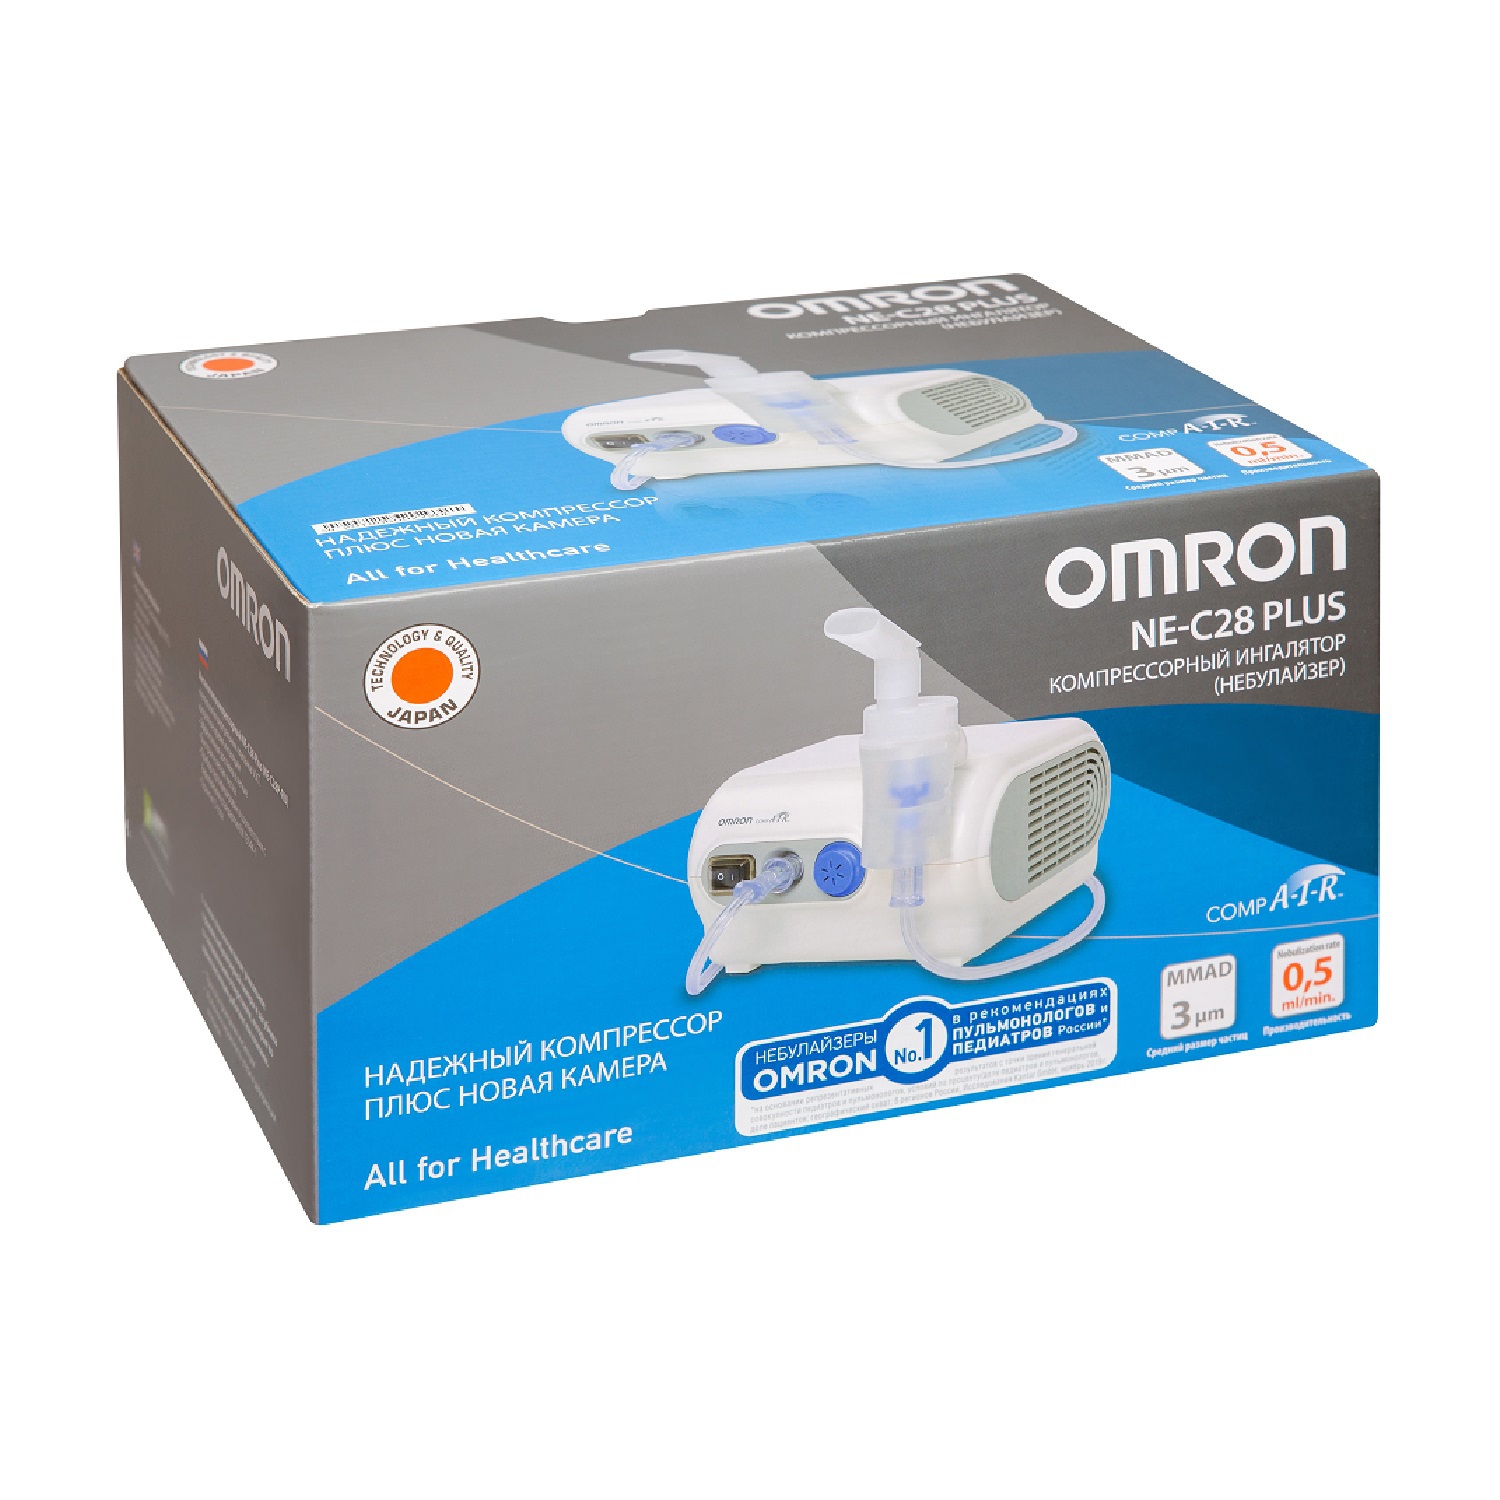 Купить Омрон небулайзер NE-C28 Plus компрессорный, Omron